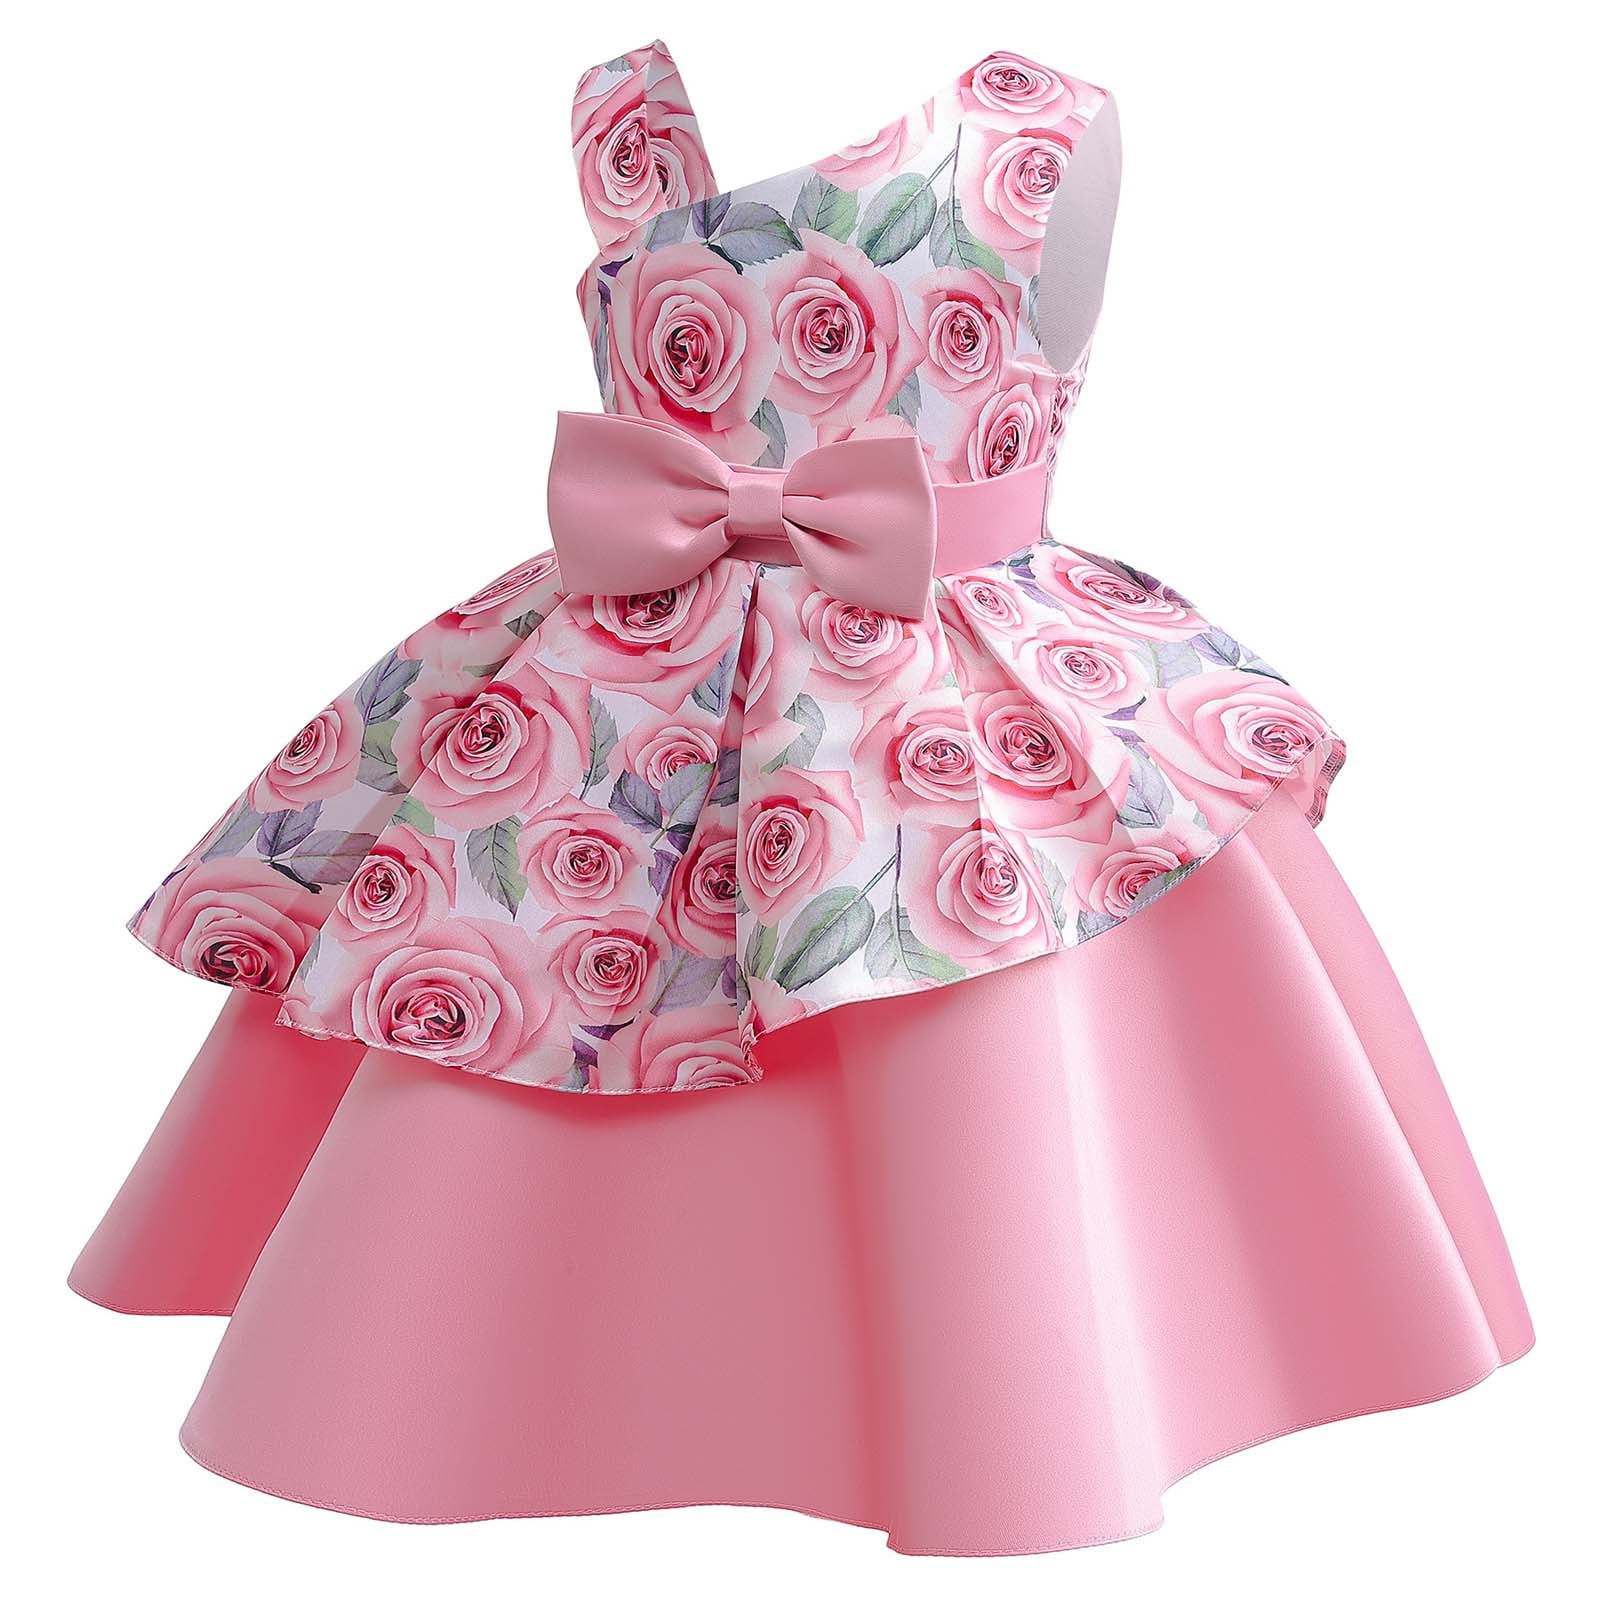 Herrnalise Girls Formal Satin Tulle Dress Princess Flower Bow ...